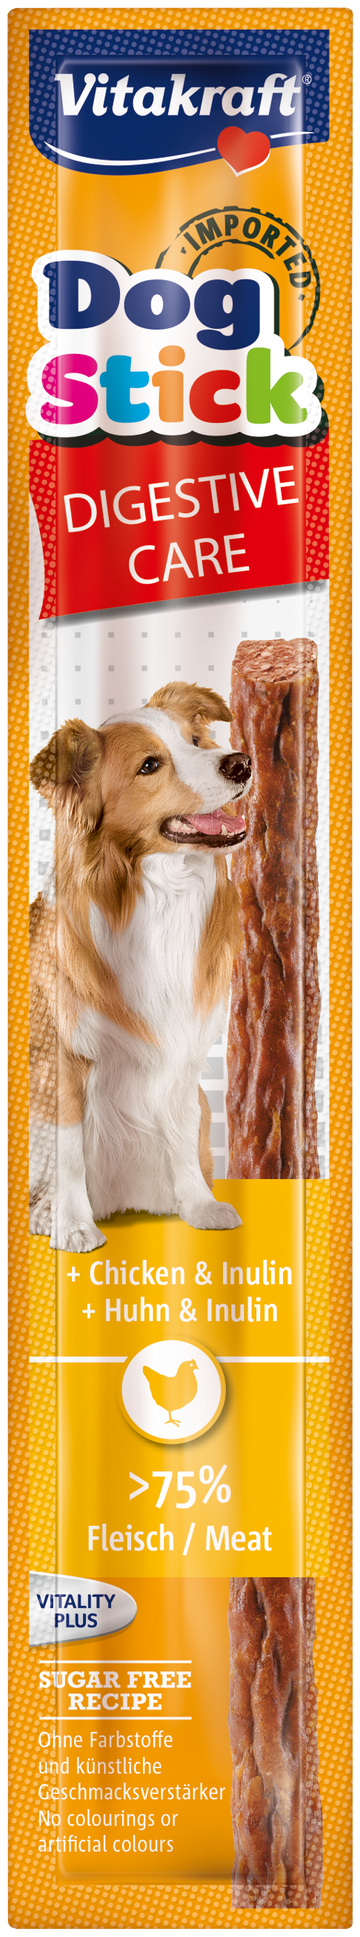 Vitakraft Dog Stick Digestive Care Chicken & Inulin Dog Treats 1pc